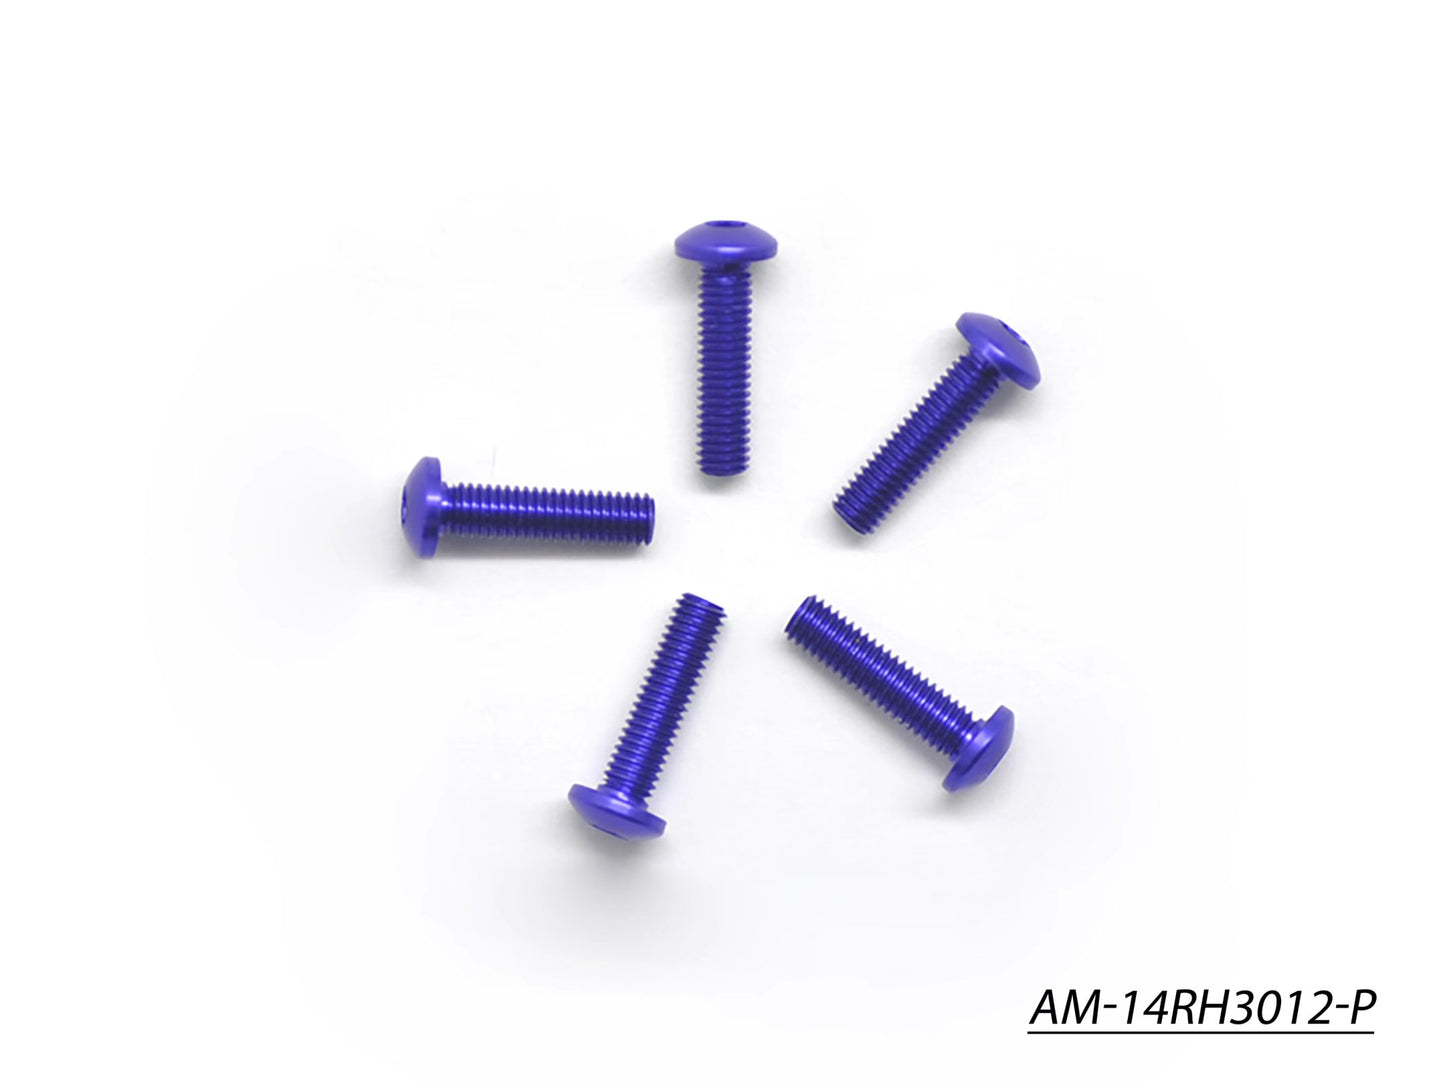 AAlu Screw allen roundhead M3x12 Purple (7075) (5) (M-14RH3012-P)